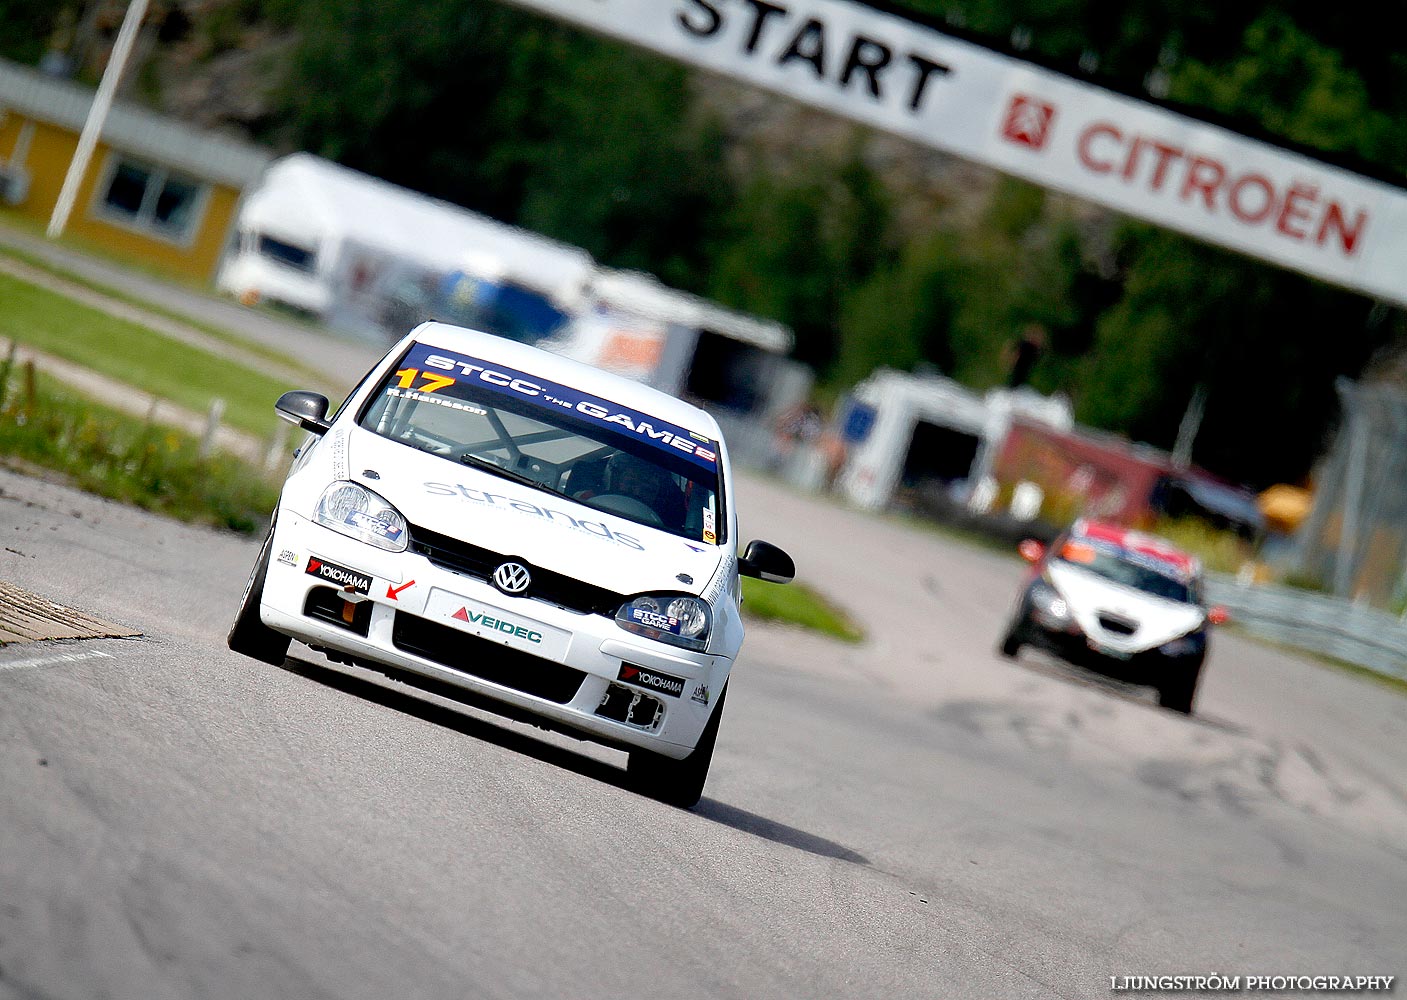 SSK Raceweek,mix,Kinnekulle Ring,Götene,Sverige,Motorsport,,2011,44495